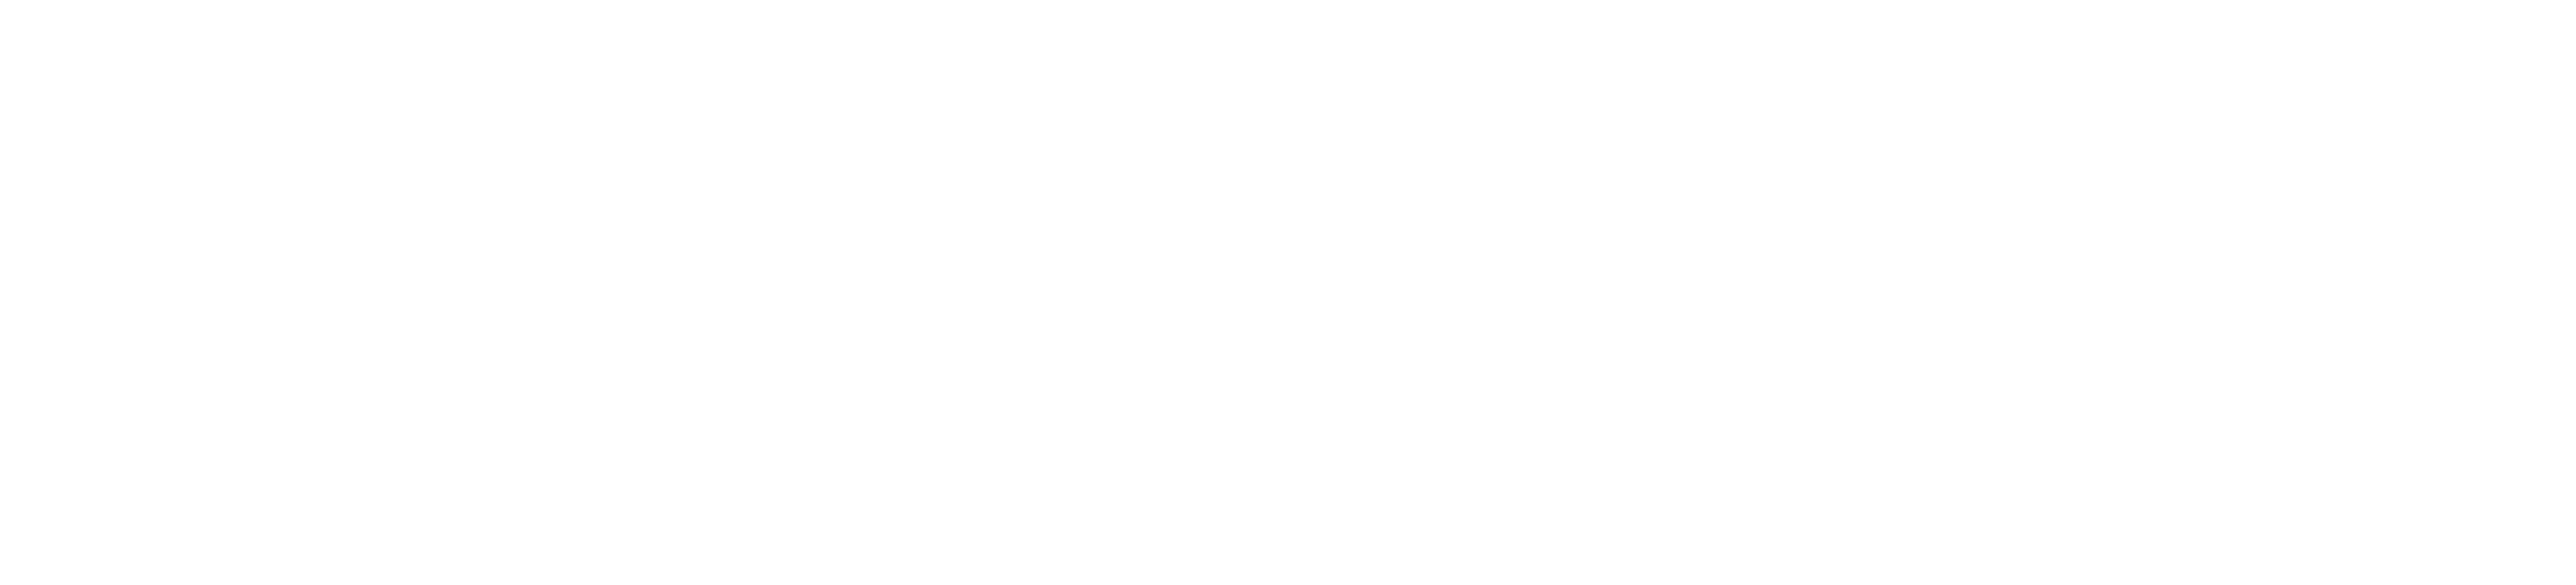 North York Moors logo